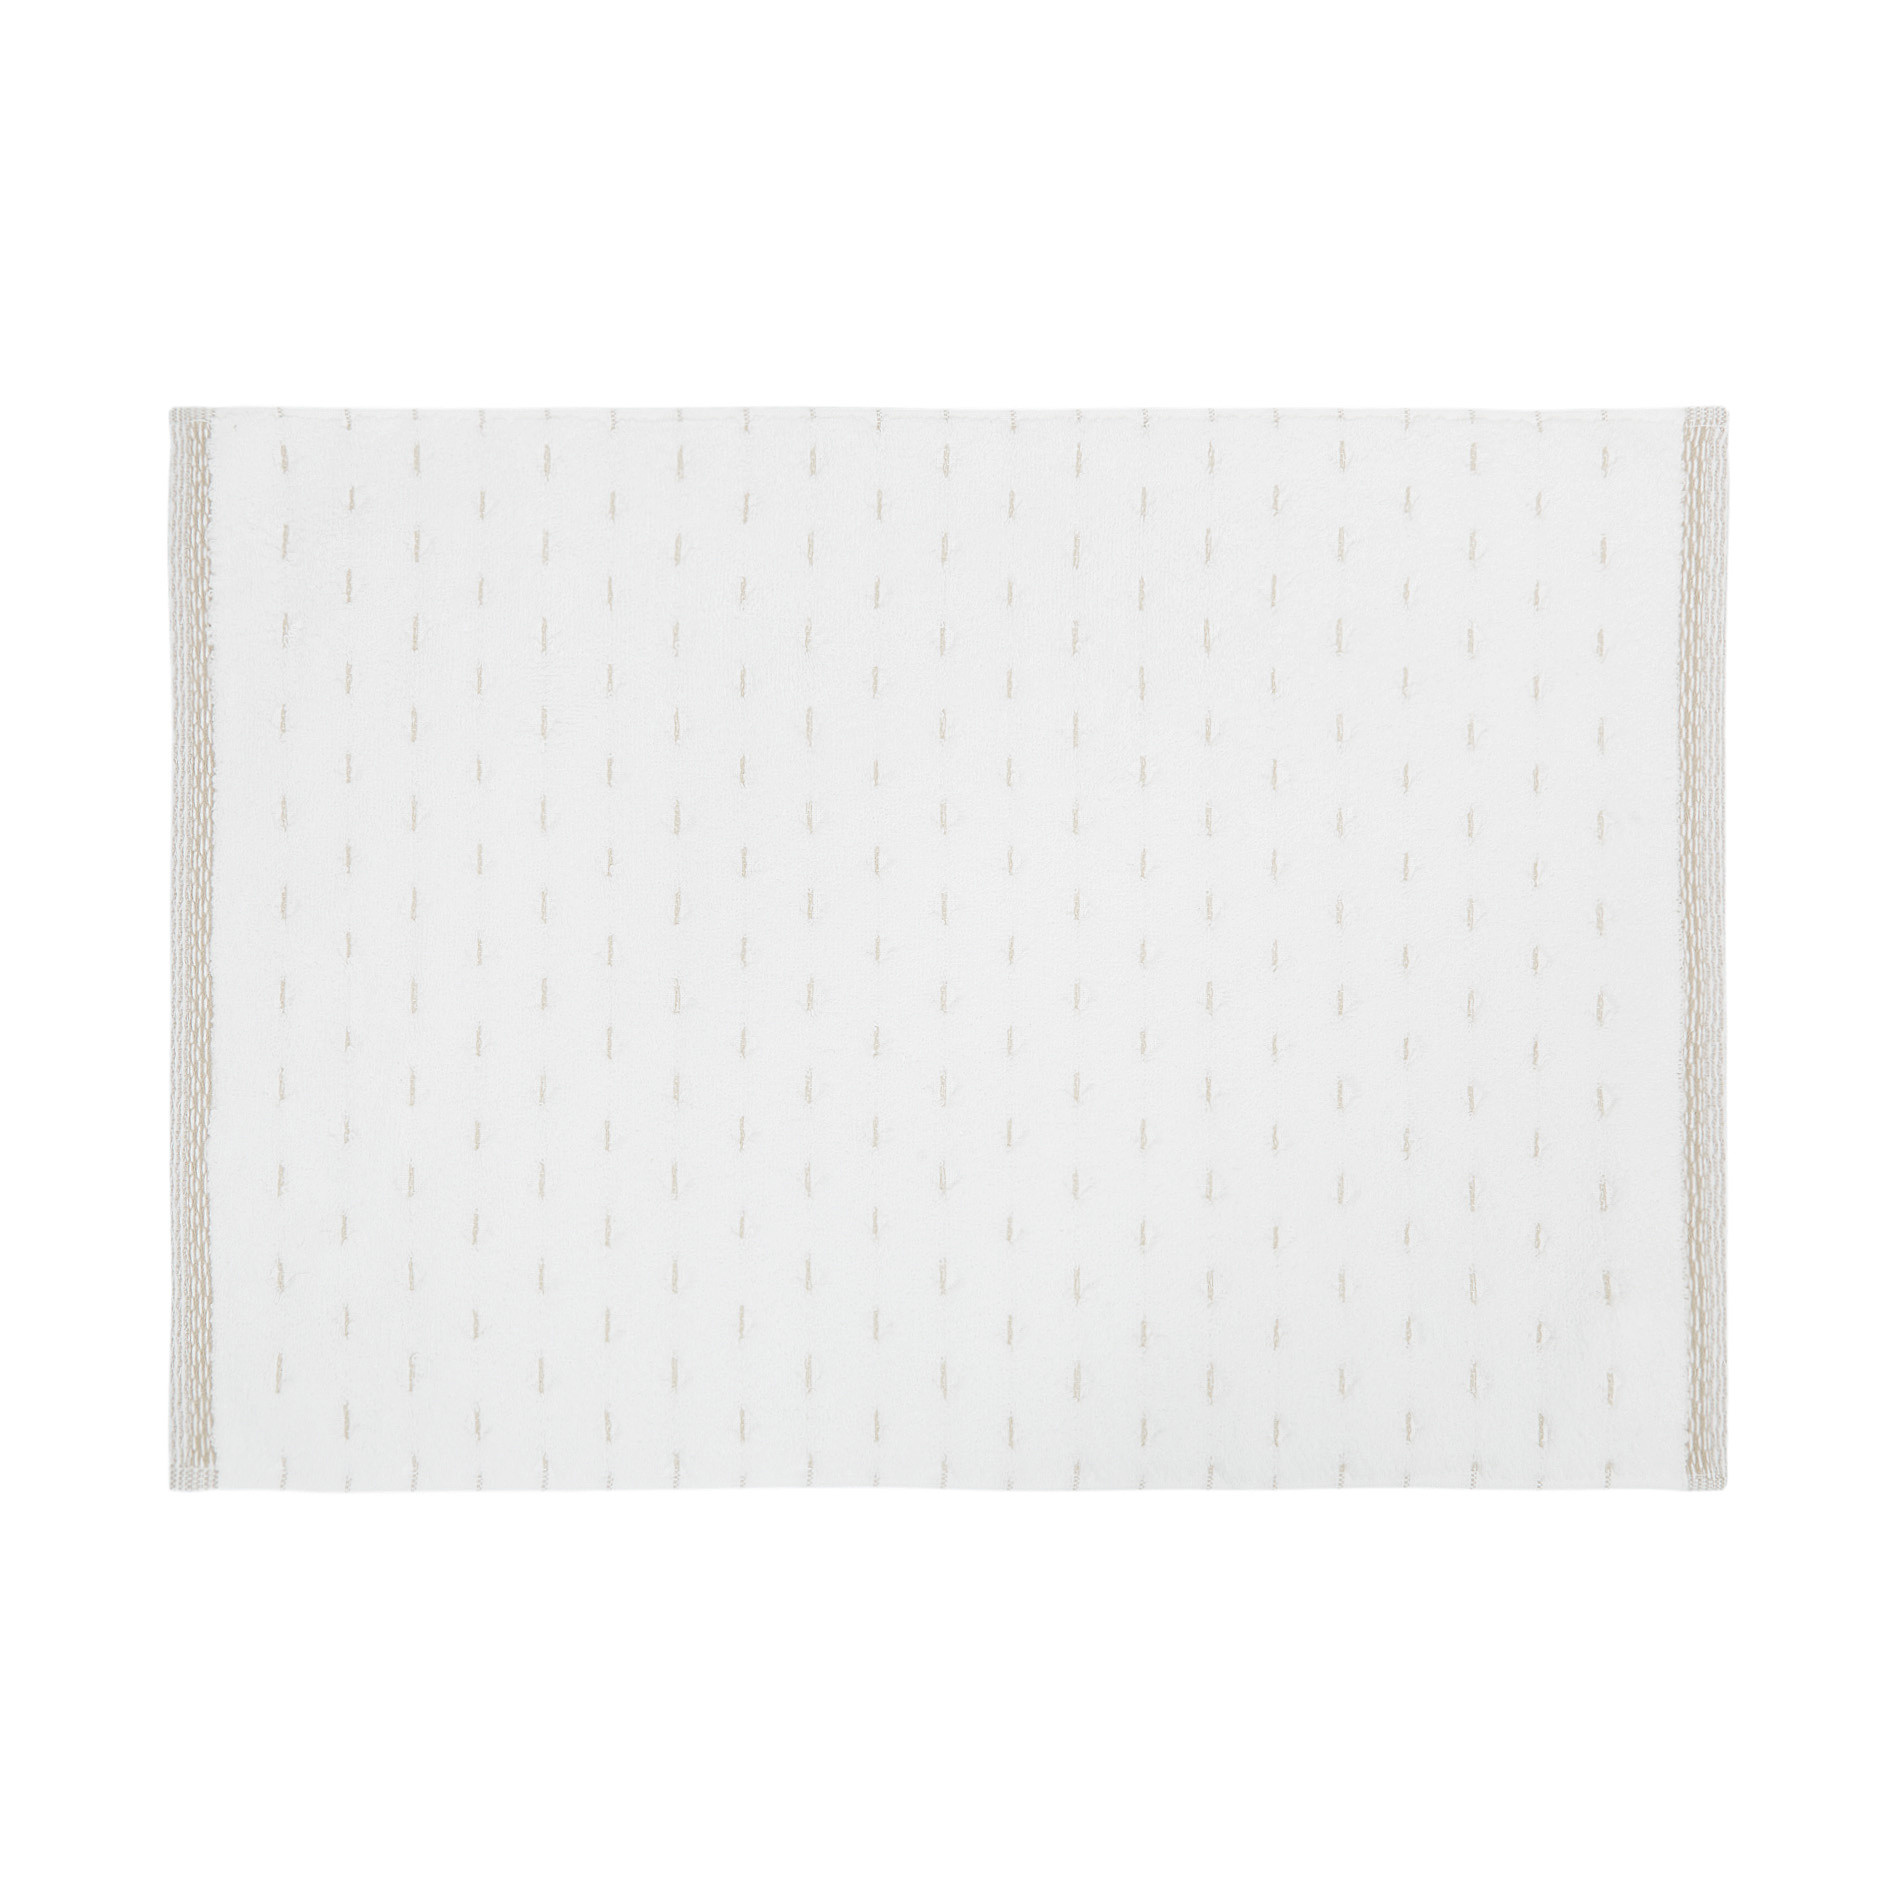 Portofino dots pattern cotton terry towel, White, large image number 1